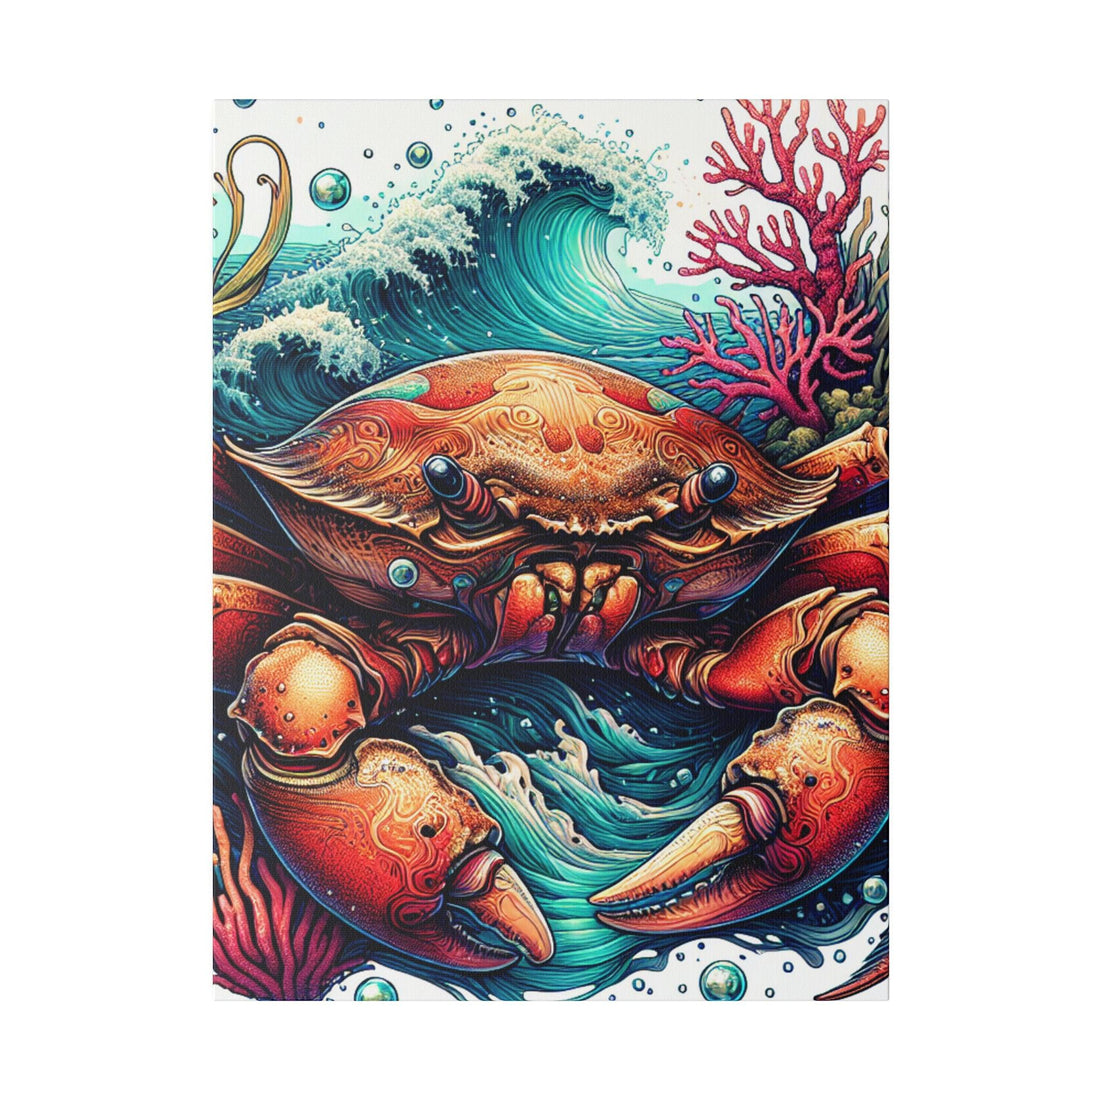 "Crustacean Elegance: Exquisite Crab Canvas Wall Art" - Canvas - The Alice Gallery